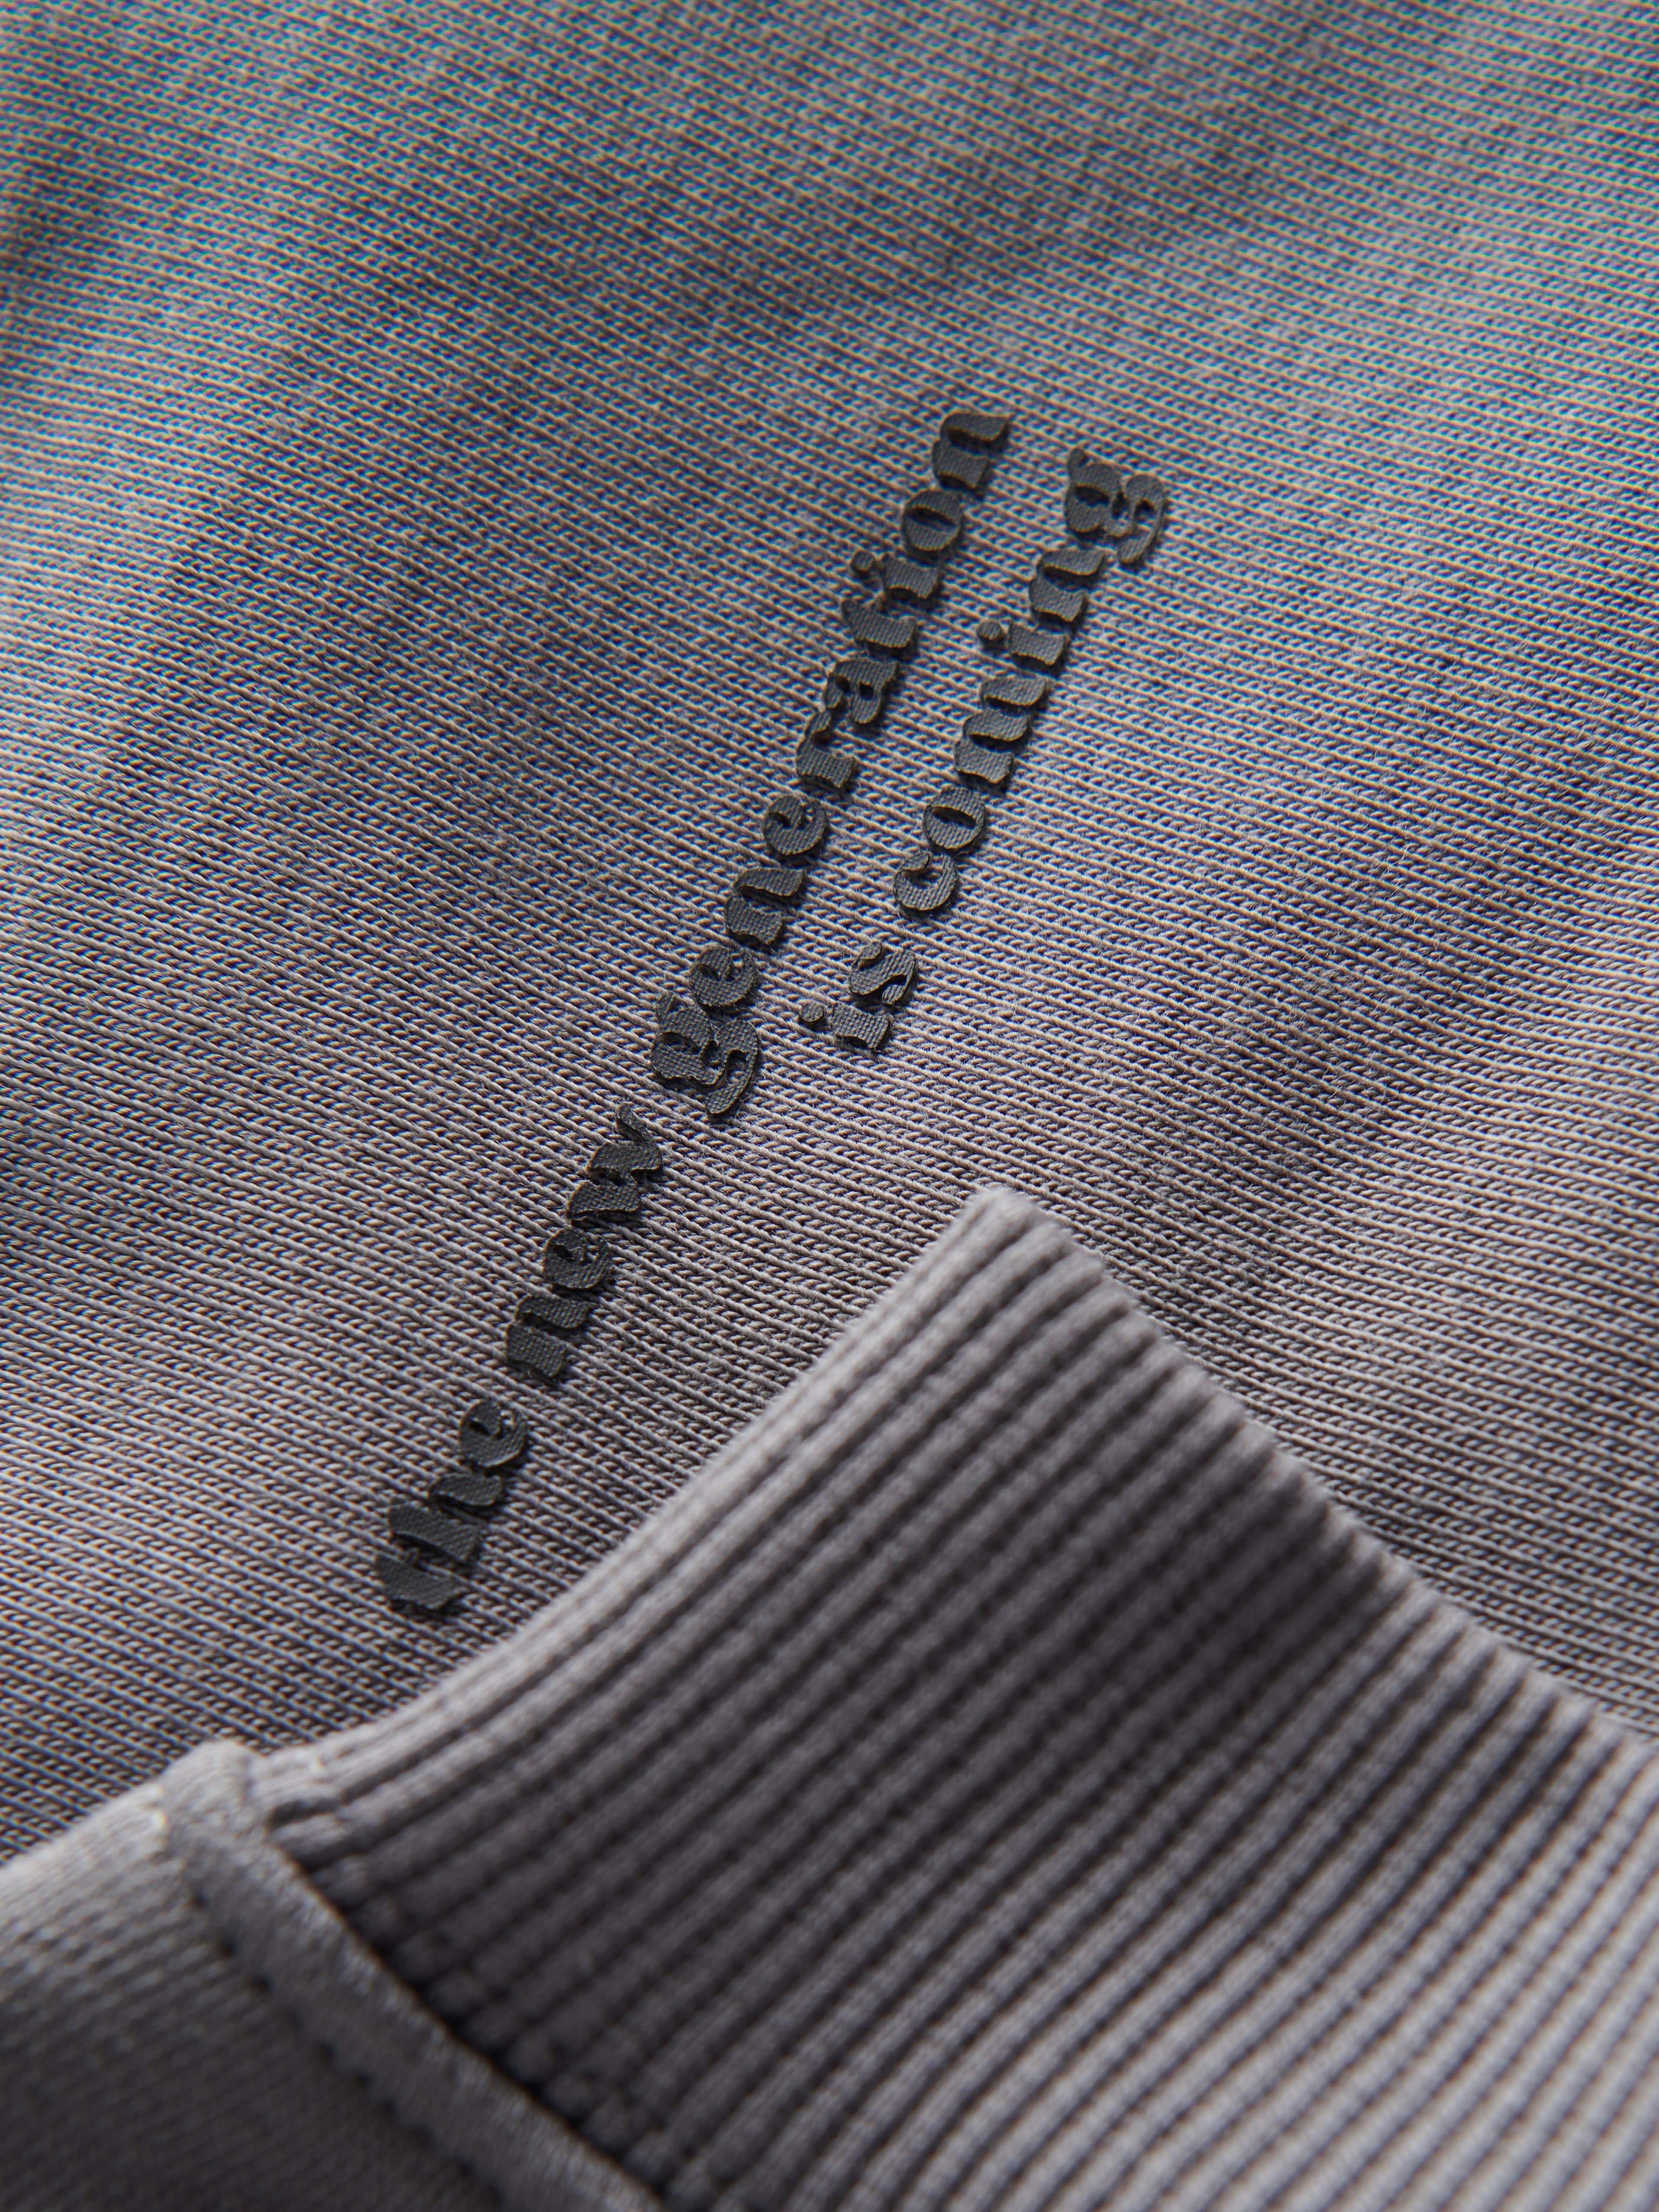 Reserved - Grey Printed Cotton Sweatshirt, Kids Boys